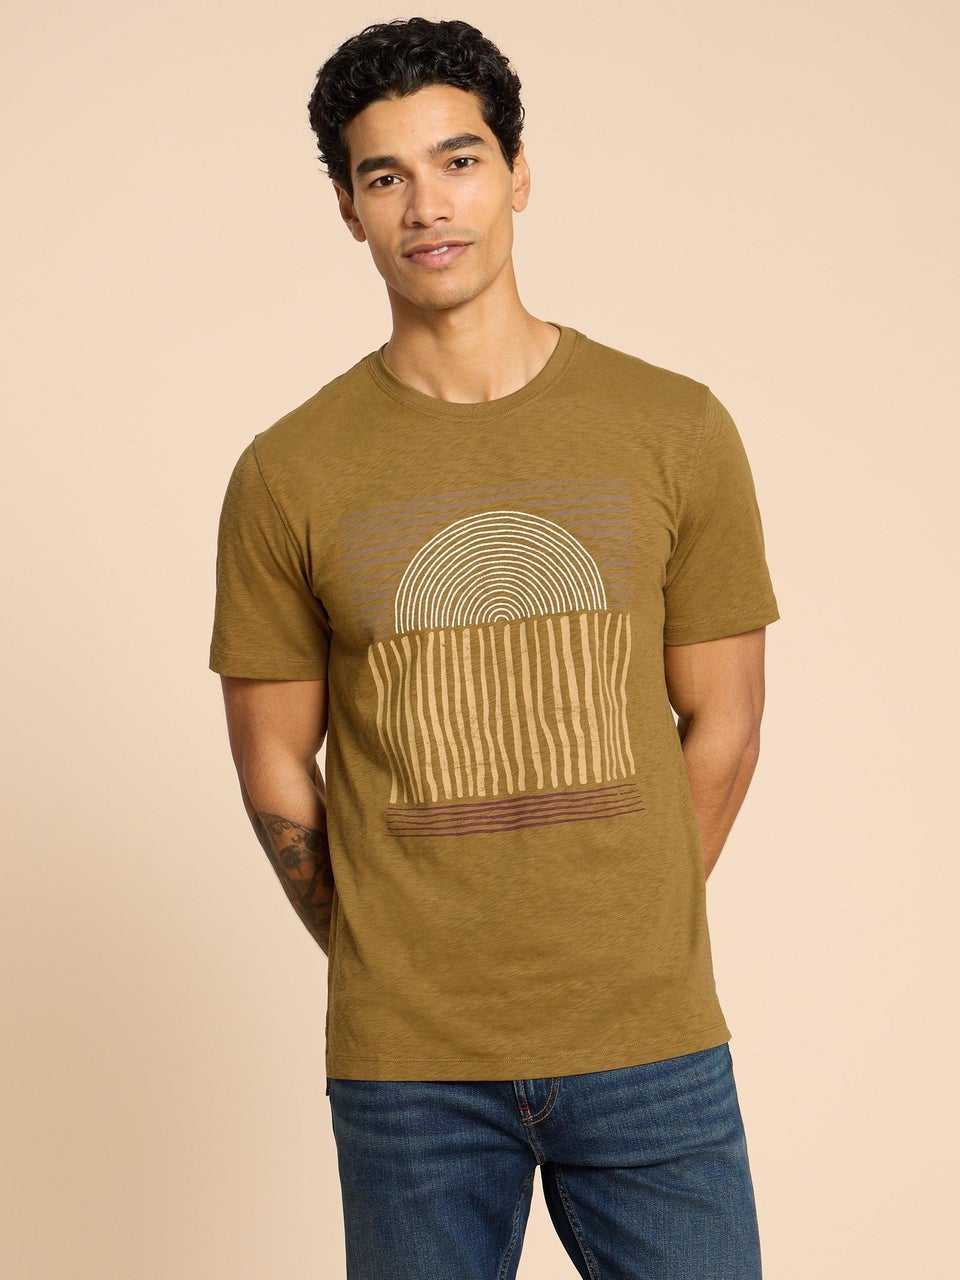 T-Shirt mit abstraktem Sonnenmotiv